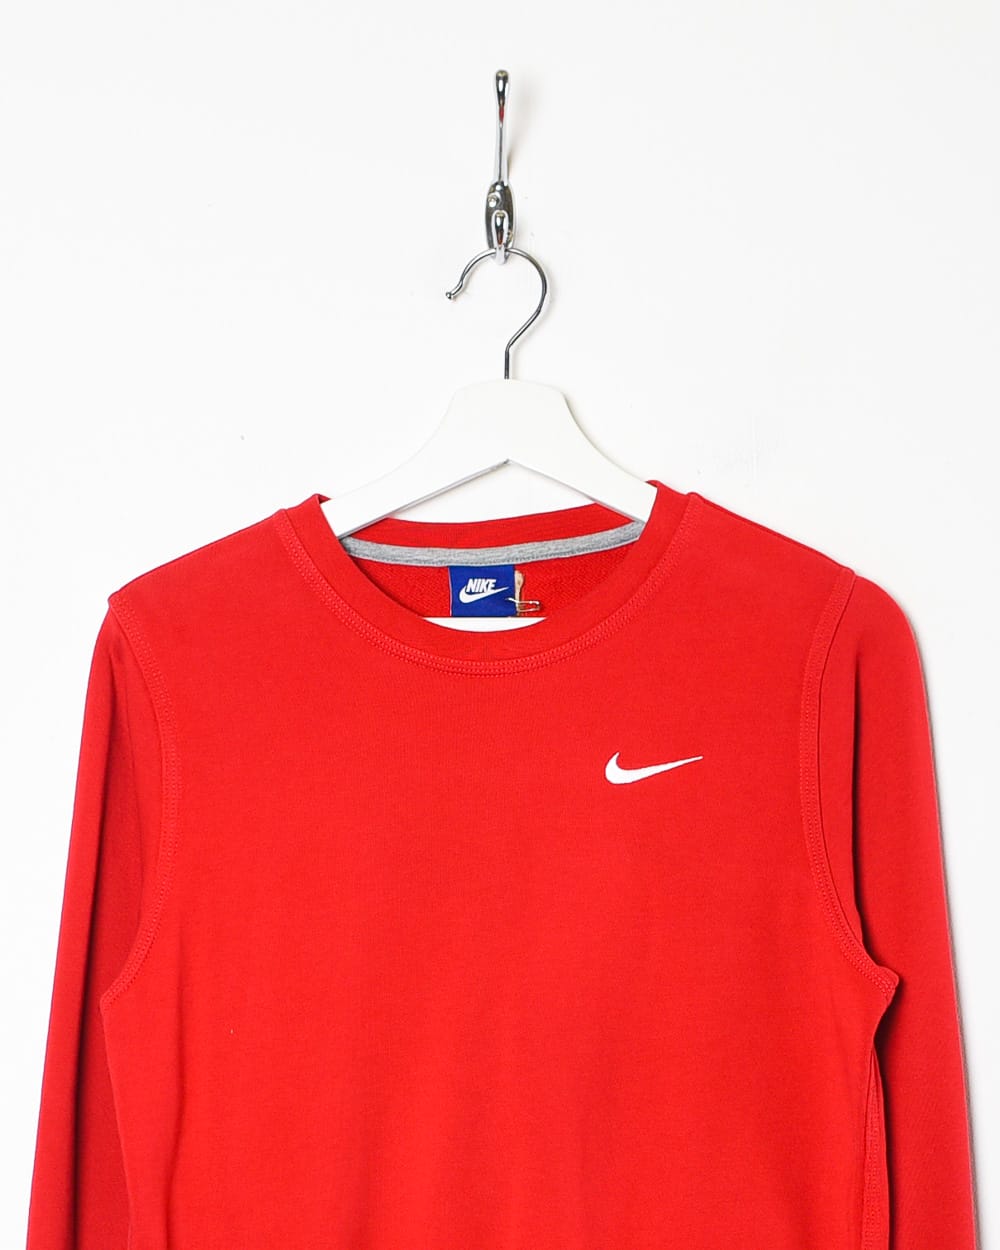 Red Nike Sweatshirt - X-Small